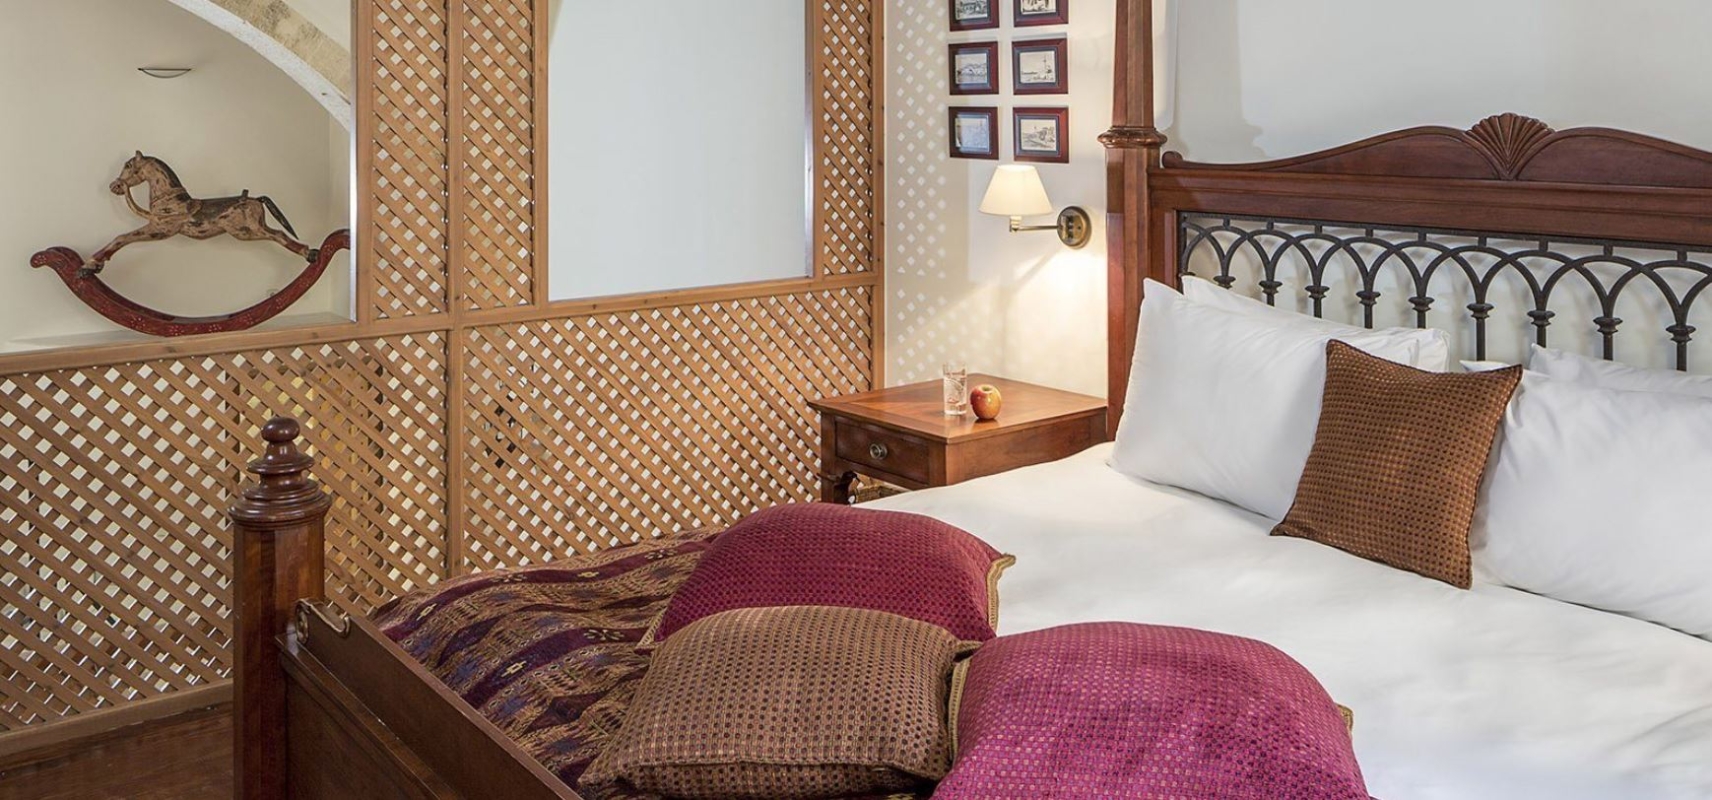 Two Bedroom Suite, Casa Delfino Hotel & Spa, Crete